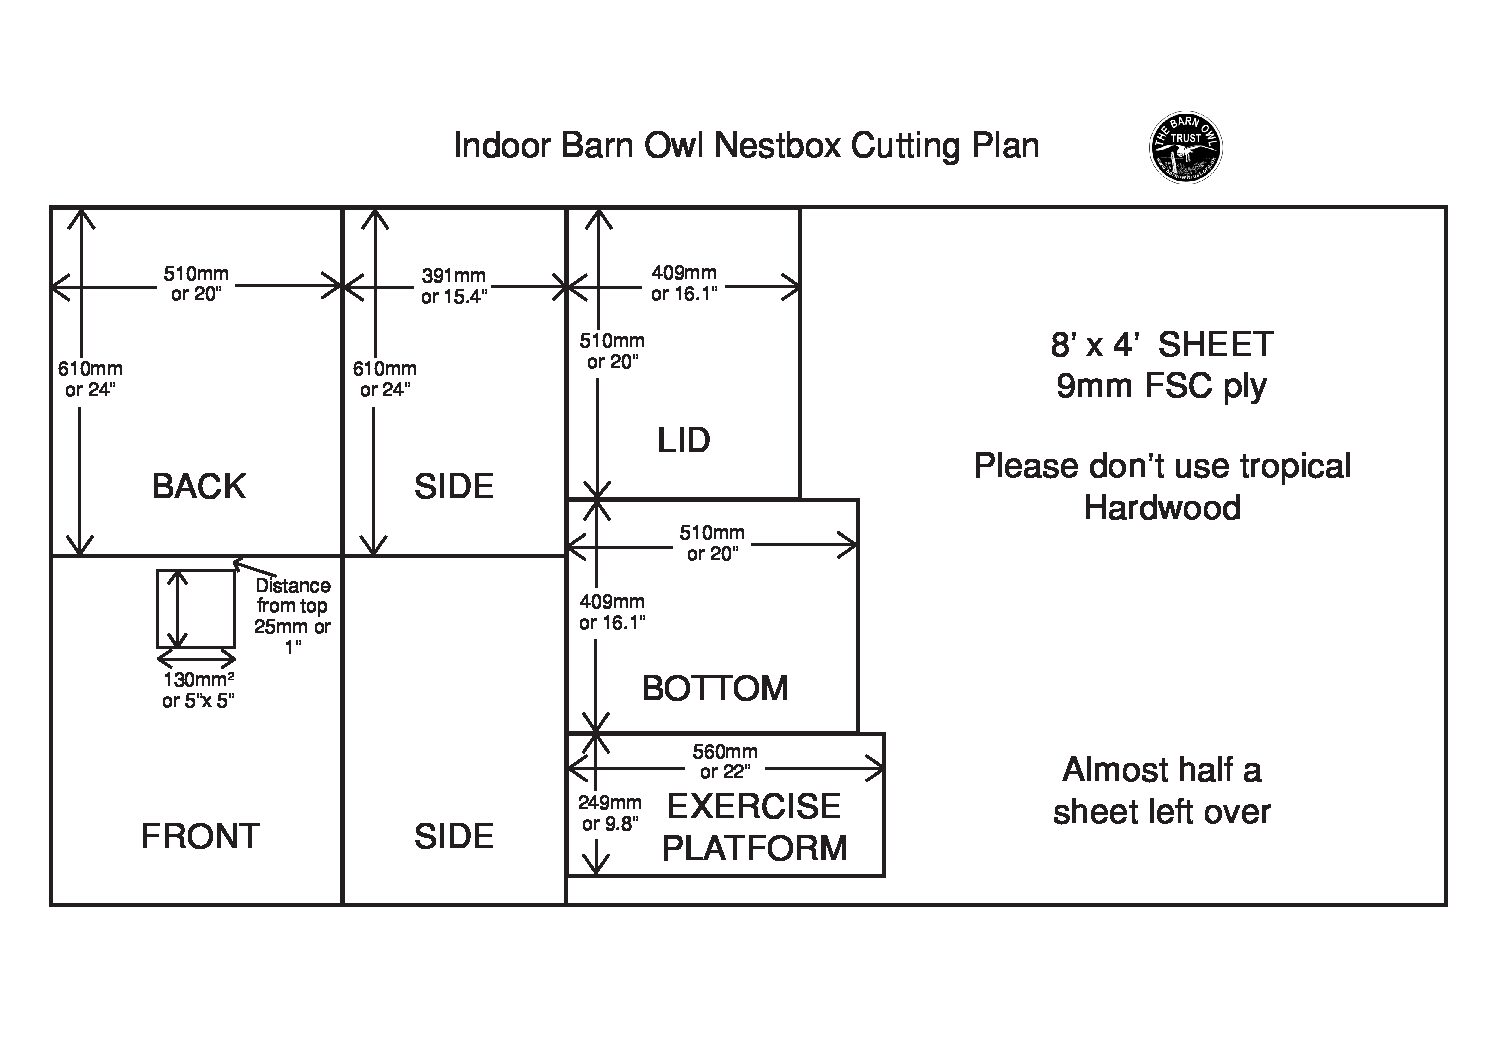 Indoor nestbox cutting plan 1